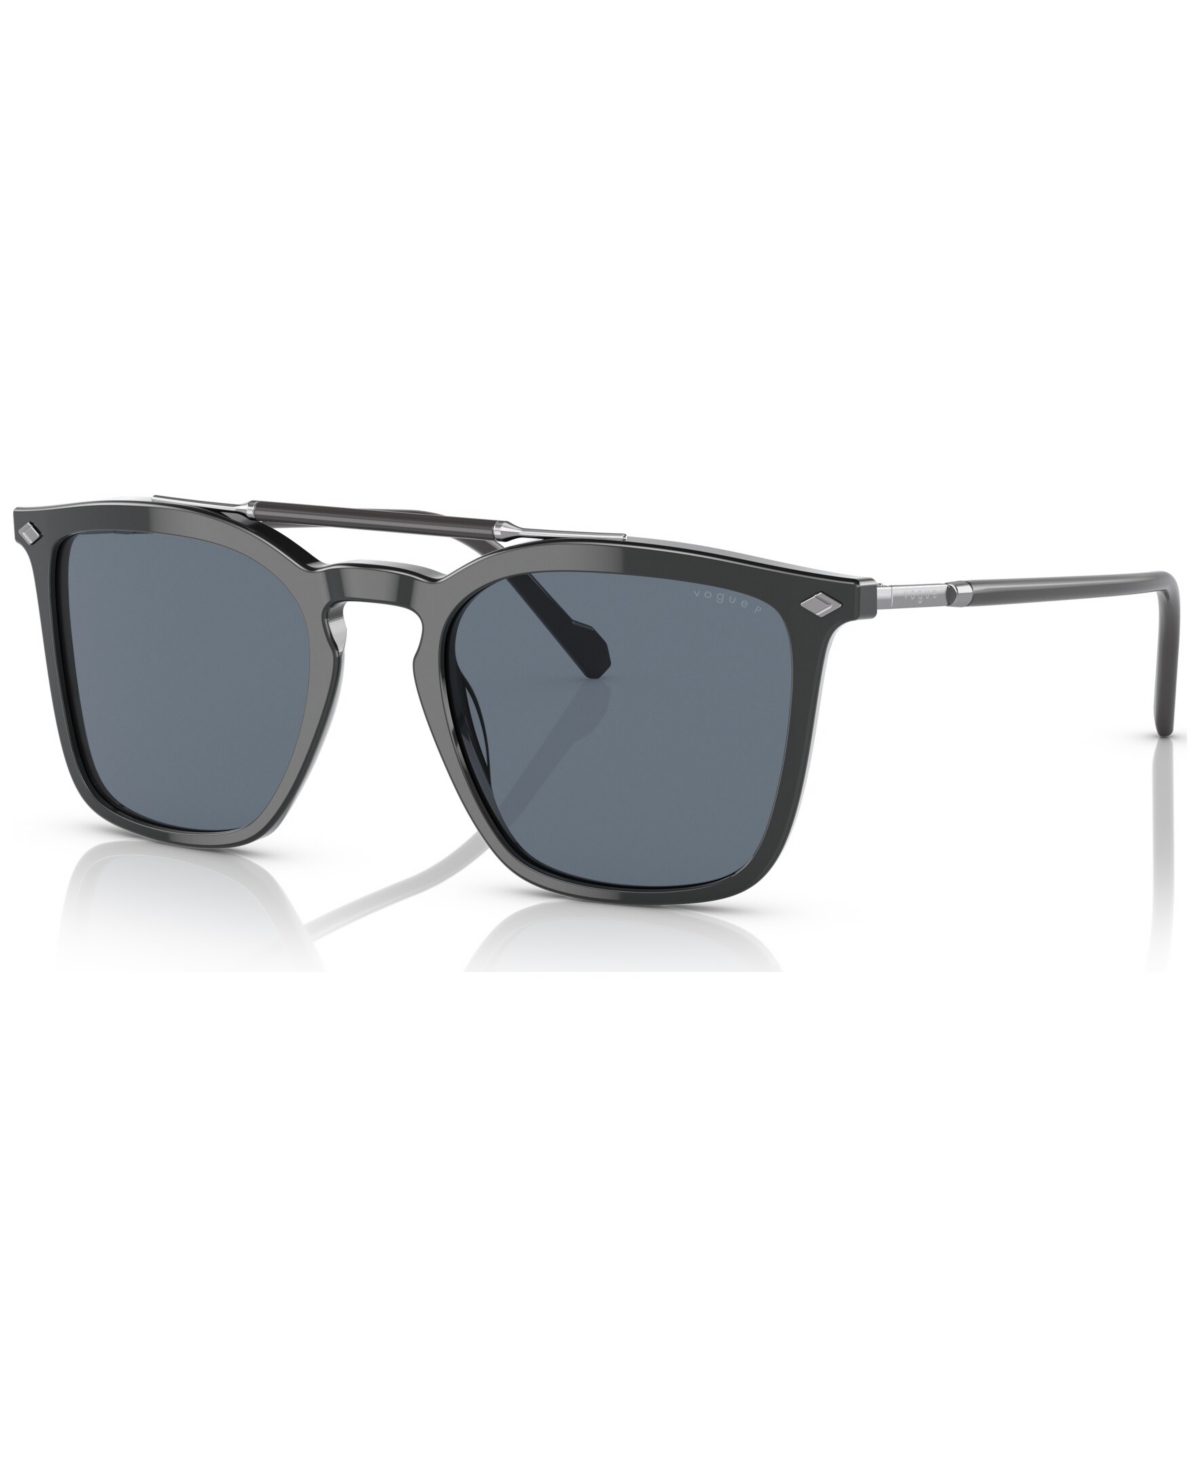 Men's Polarized Sunglasses, VO5463S51-zp - Gray